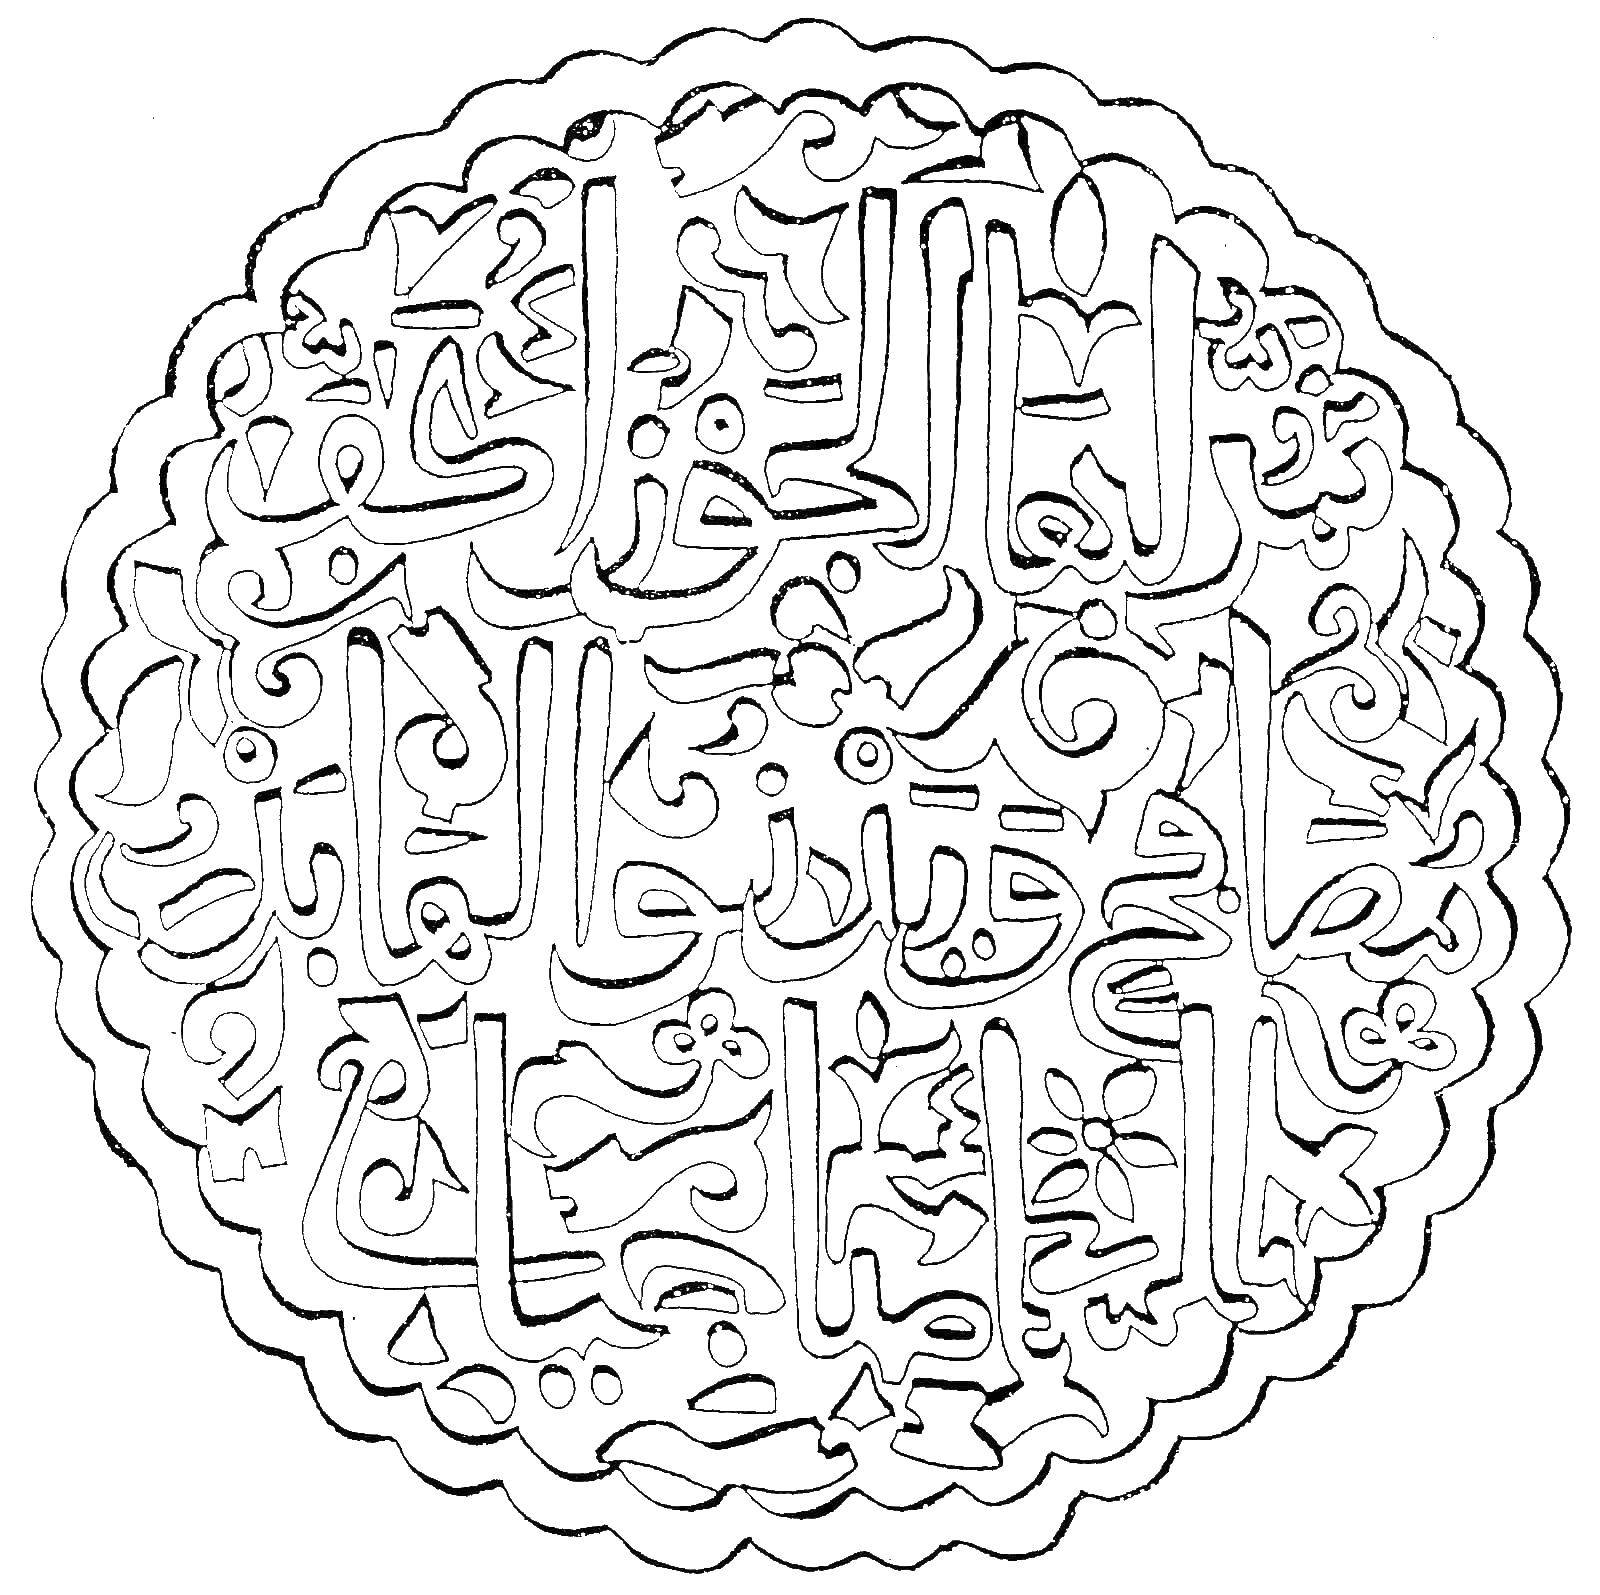 Название: Раскраска Надписи. Категория: Коран. Теги: надписи, коран.